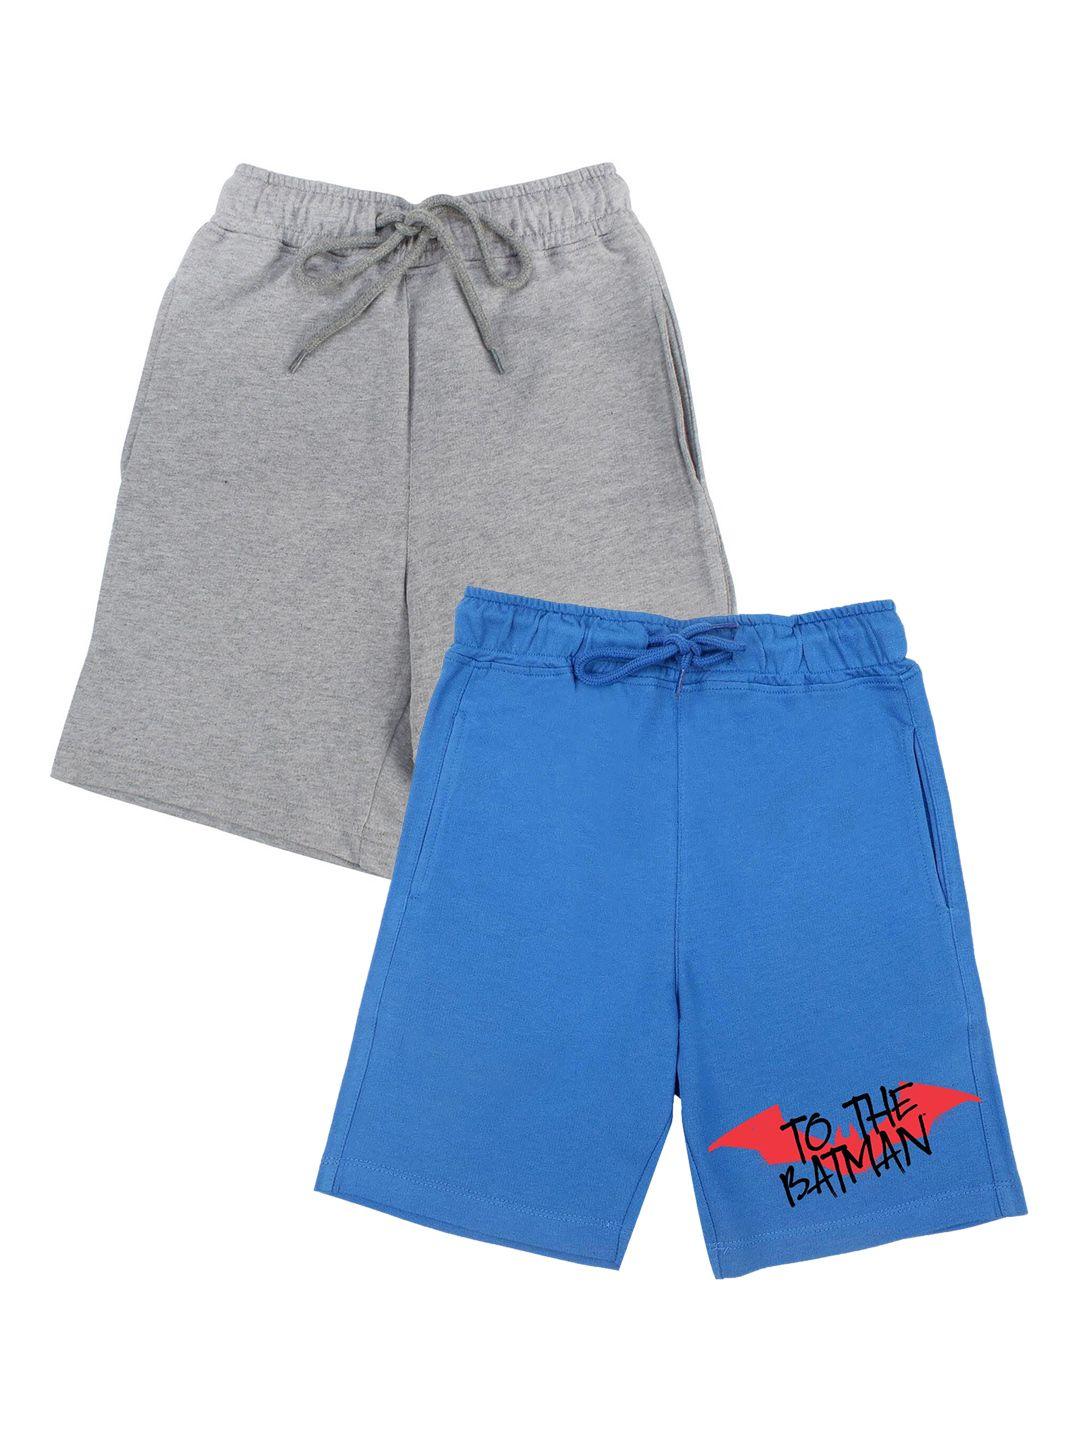 dc by wear your mind boys set of 2 blue & grey batman outdoor shorts